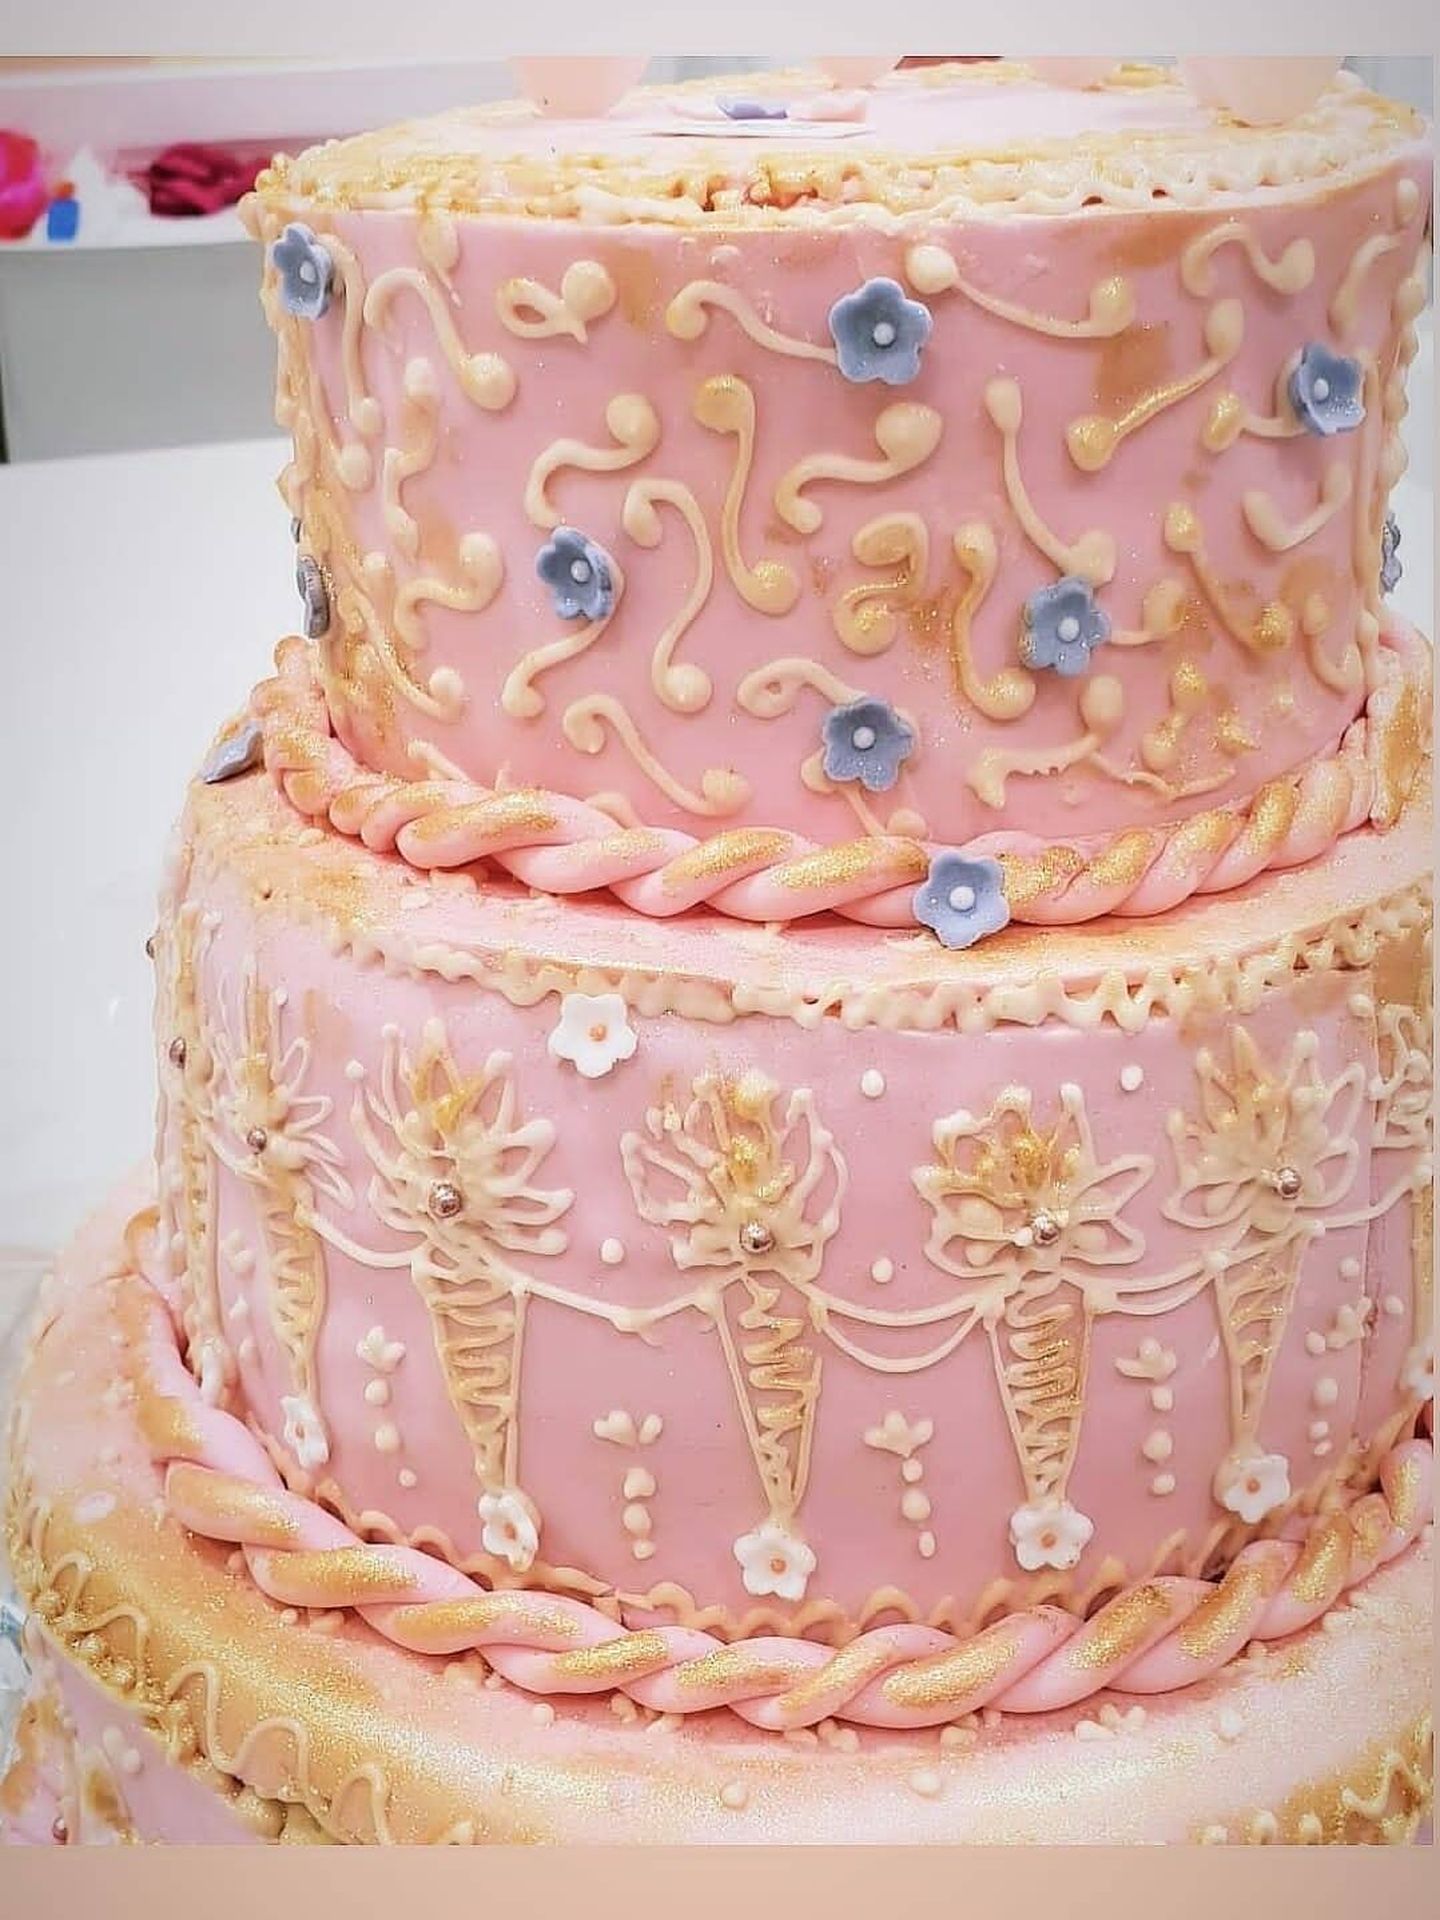 Una tarta nupcial. (Instagram/ @patriciaarismendicatering)